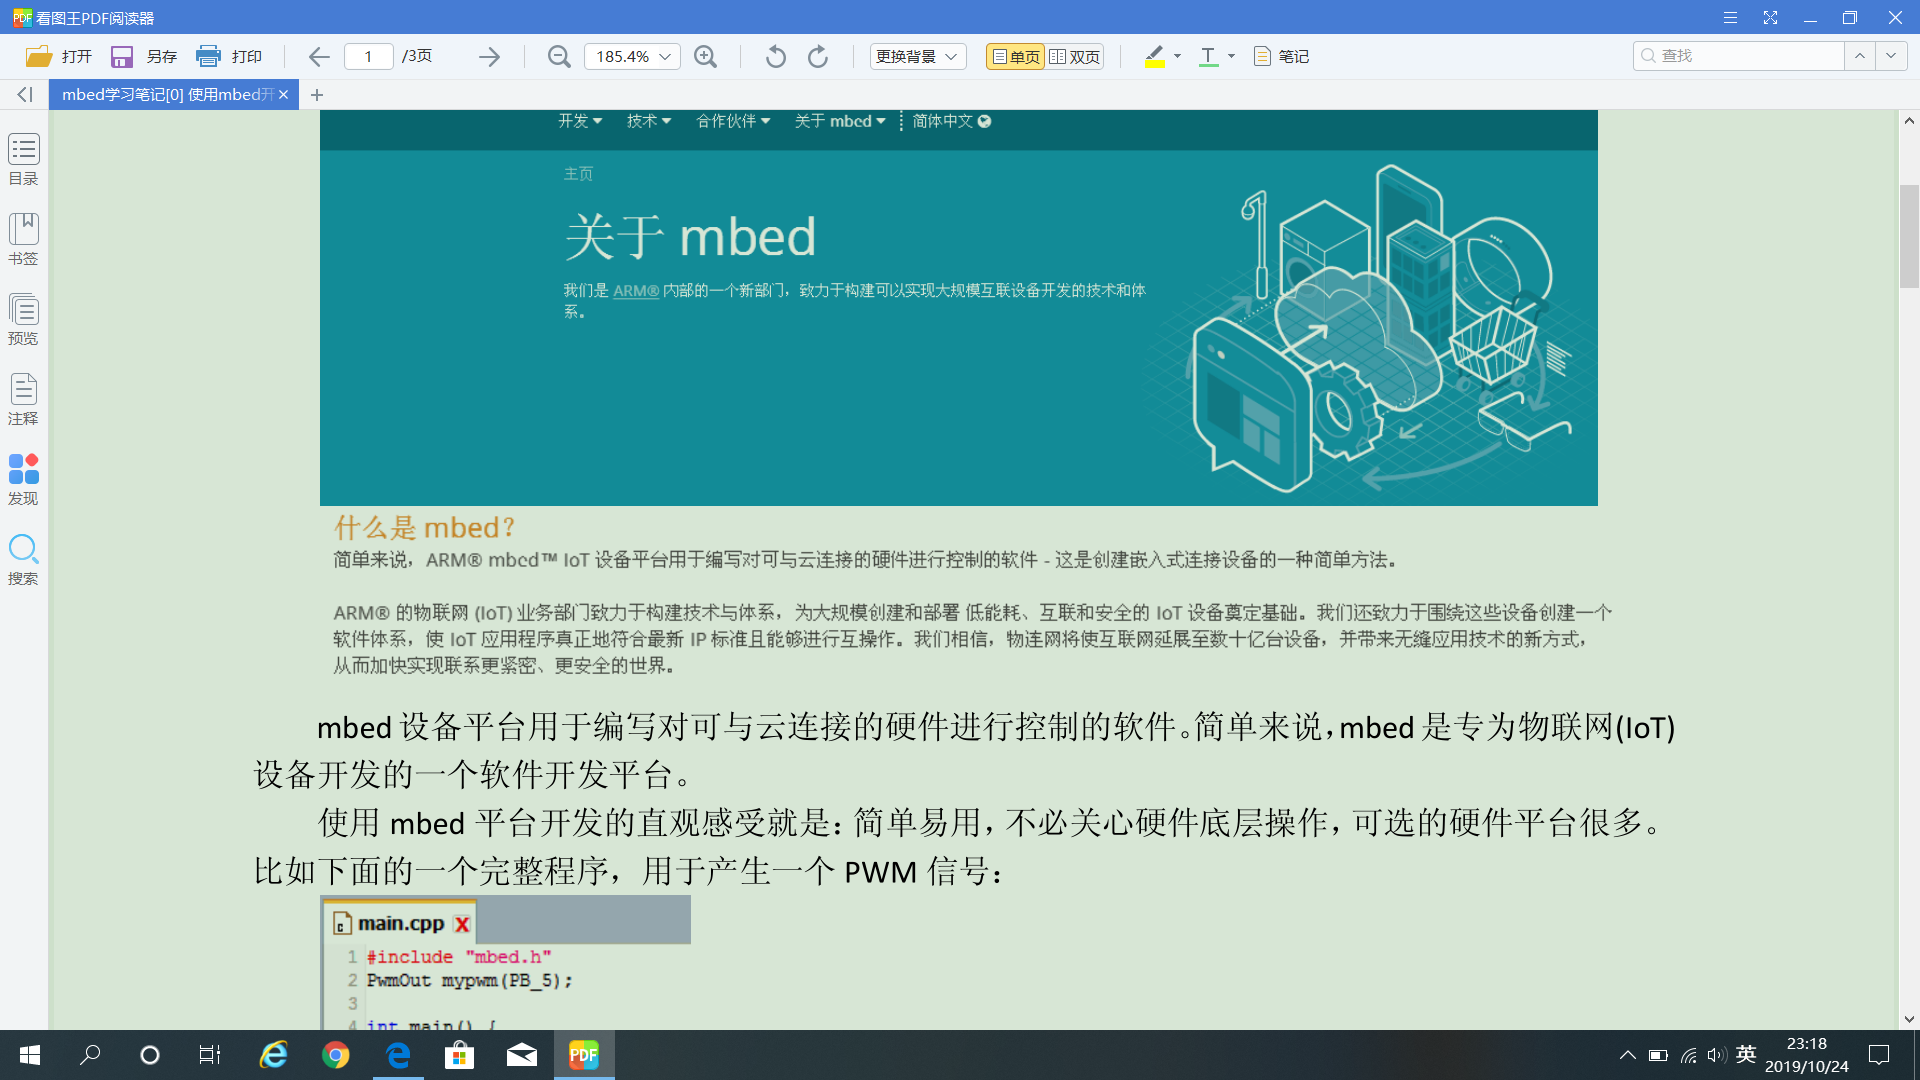  mbed学习笔记[0] 使用mbed开发的优势(Lu)